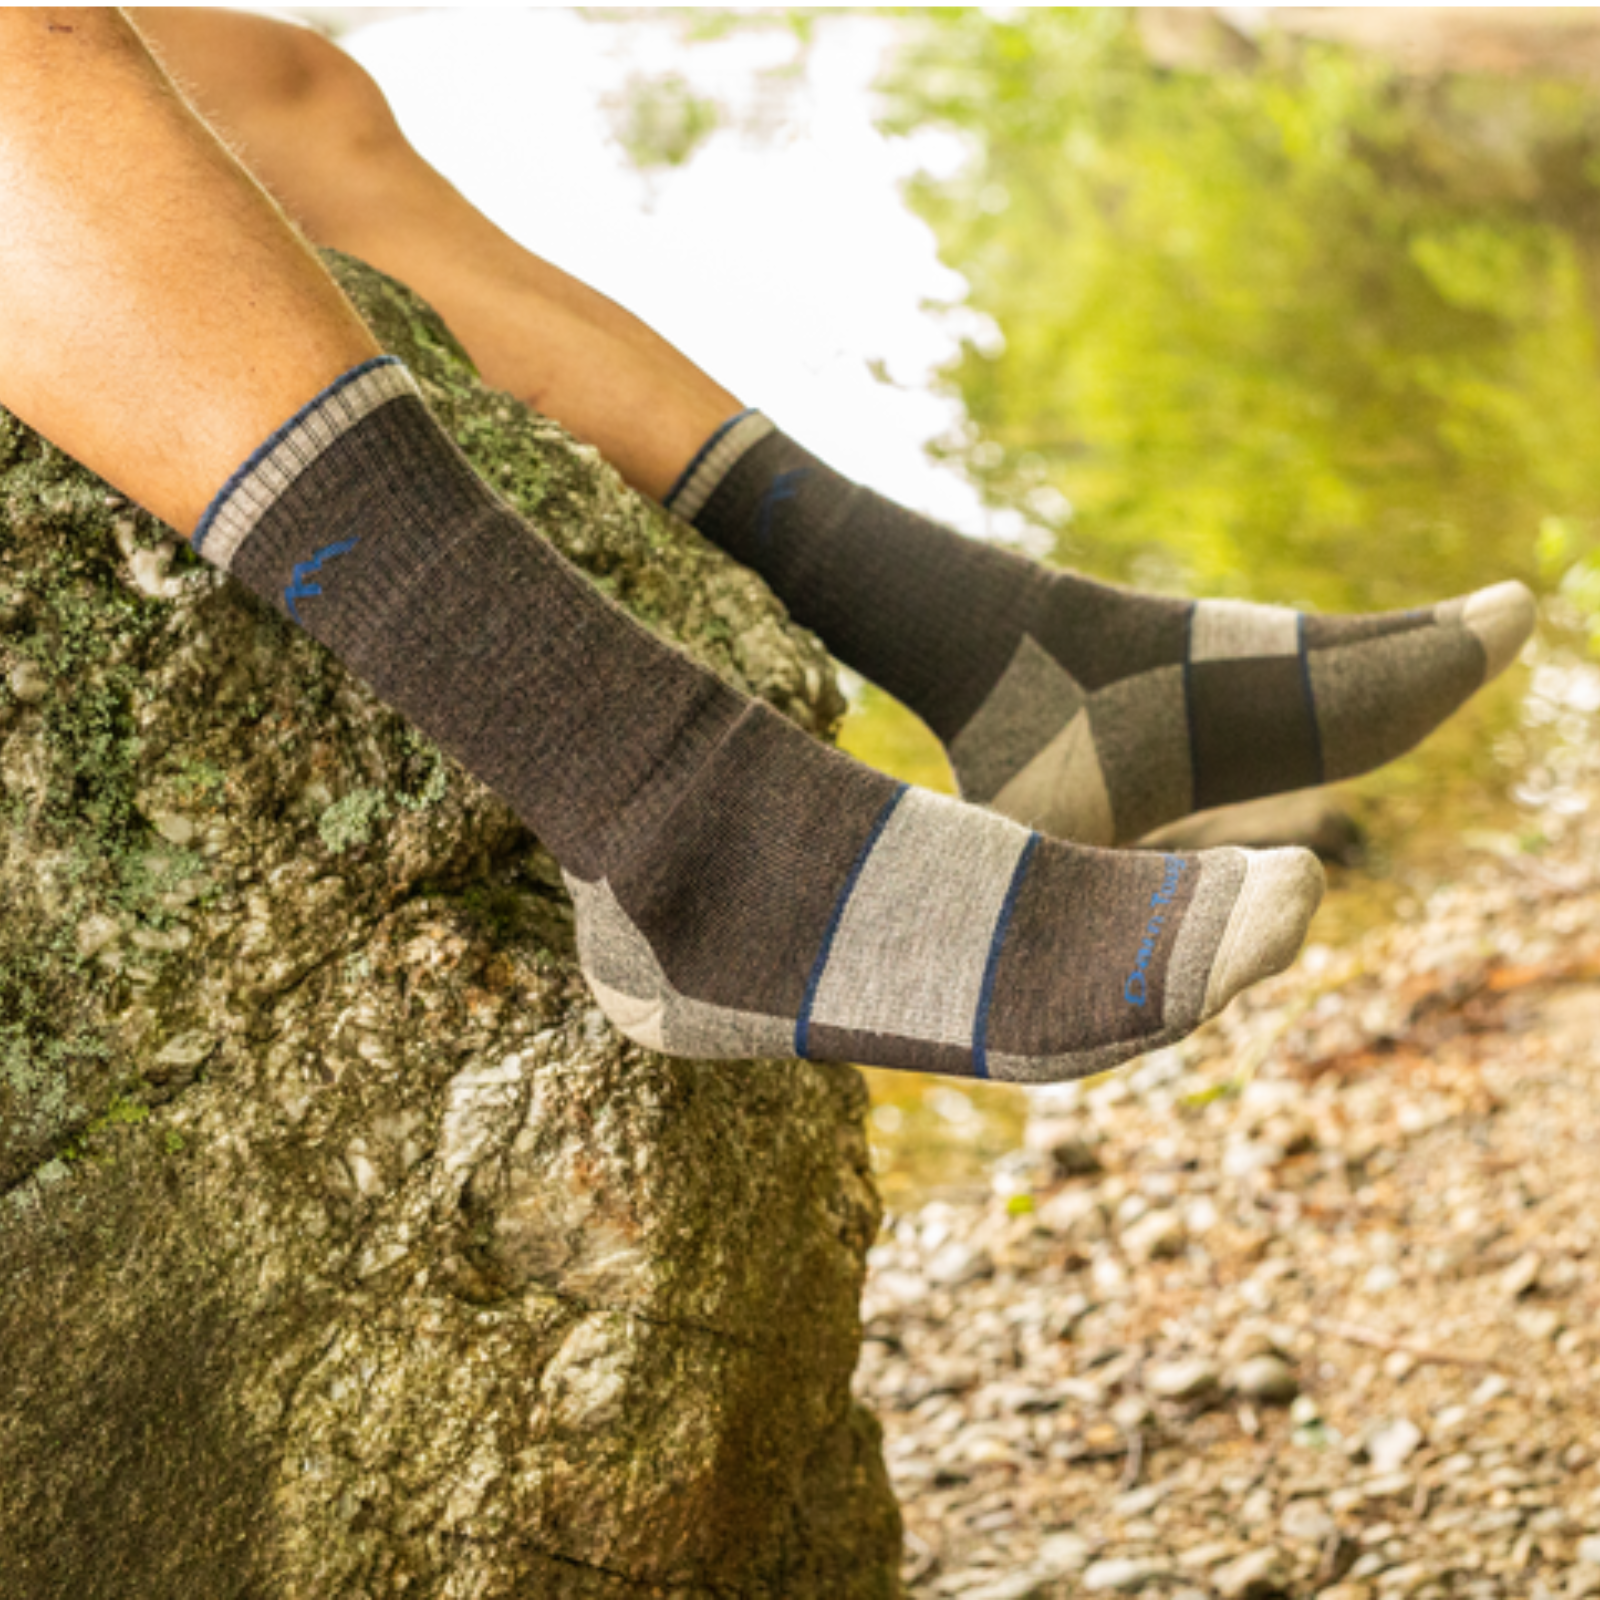 Darn Tough Wool Socks Review: 'Best Outdoor Socks' - Man Makes Fire